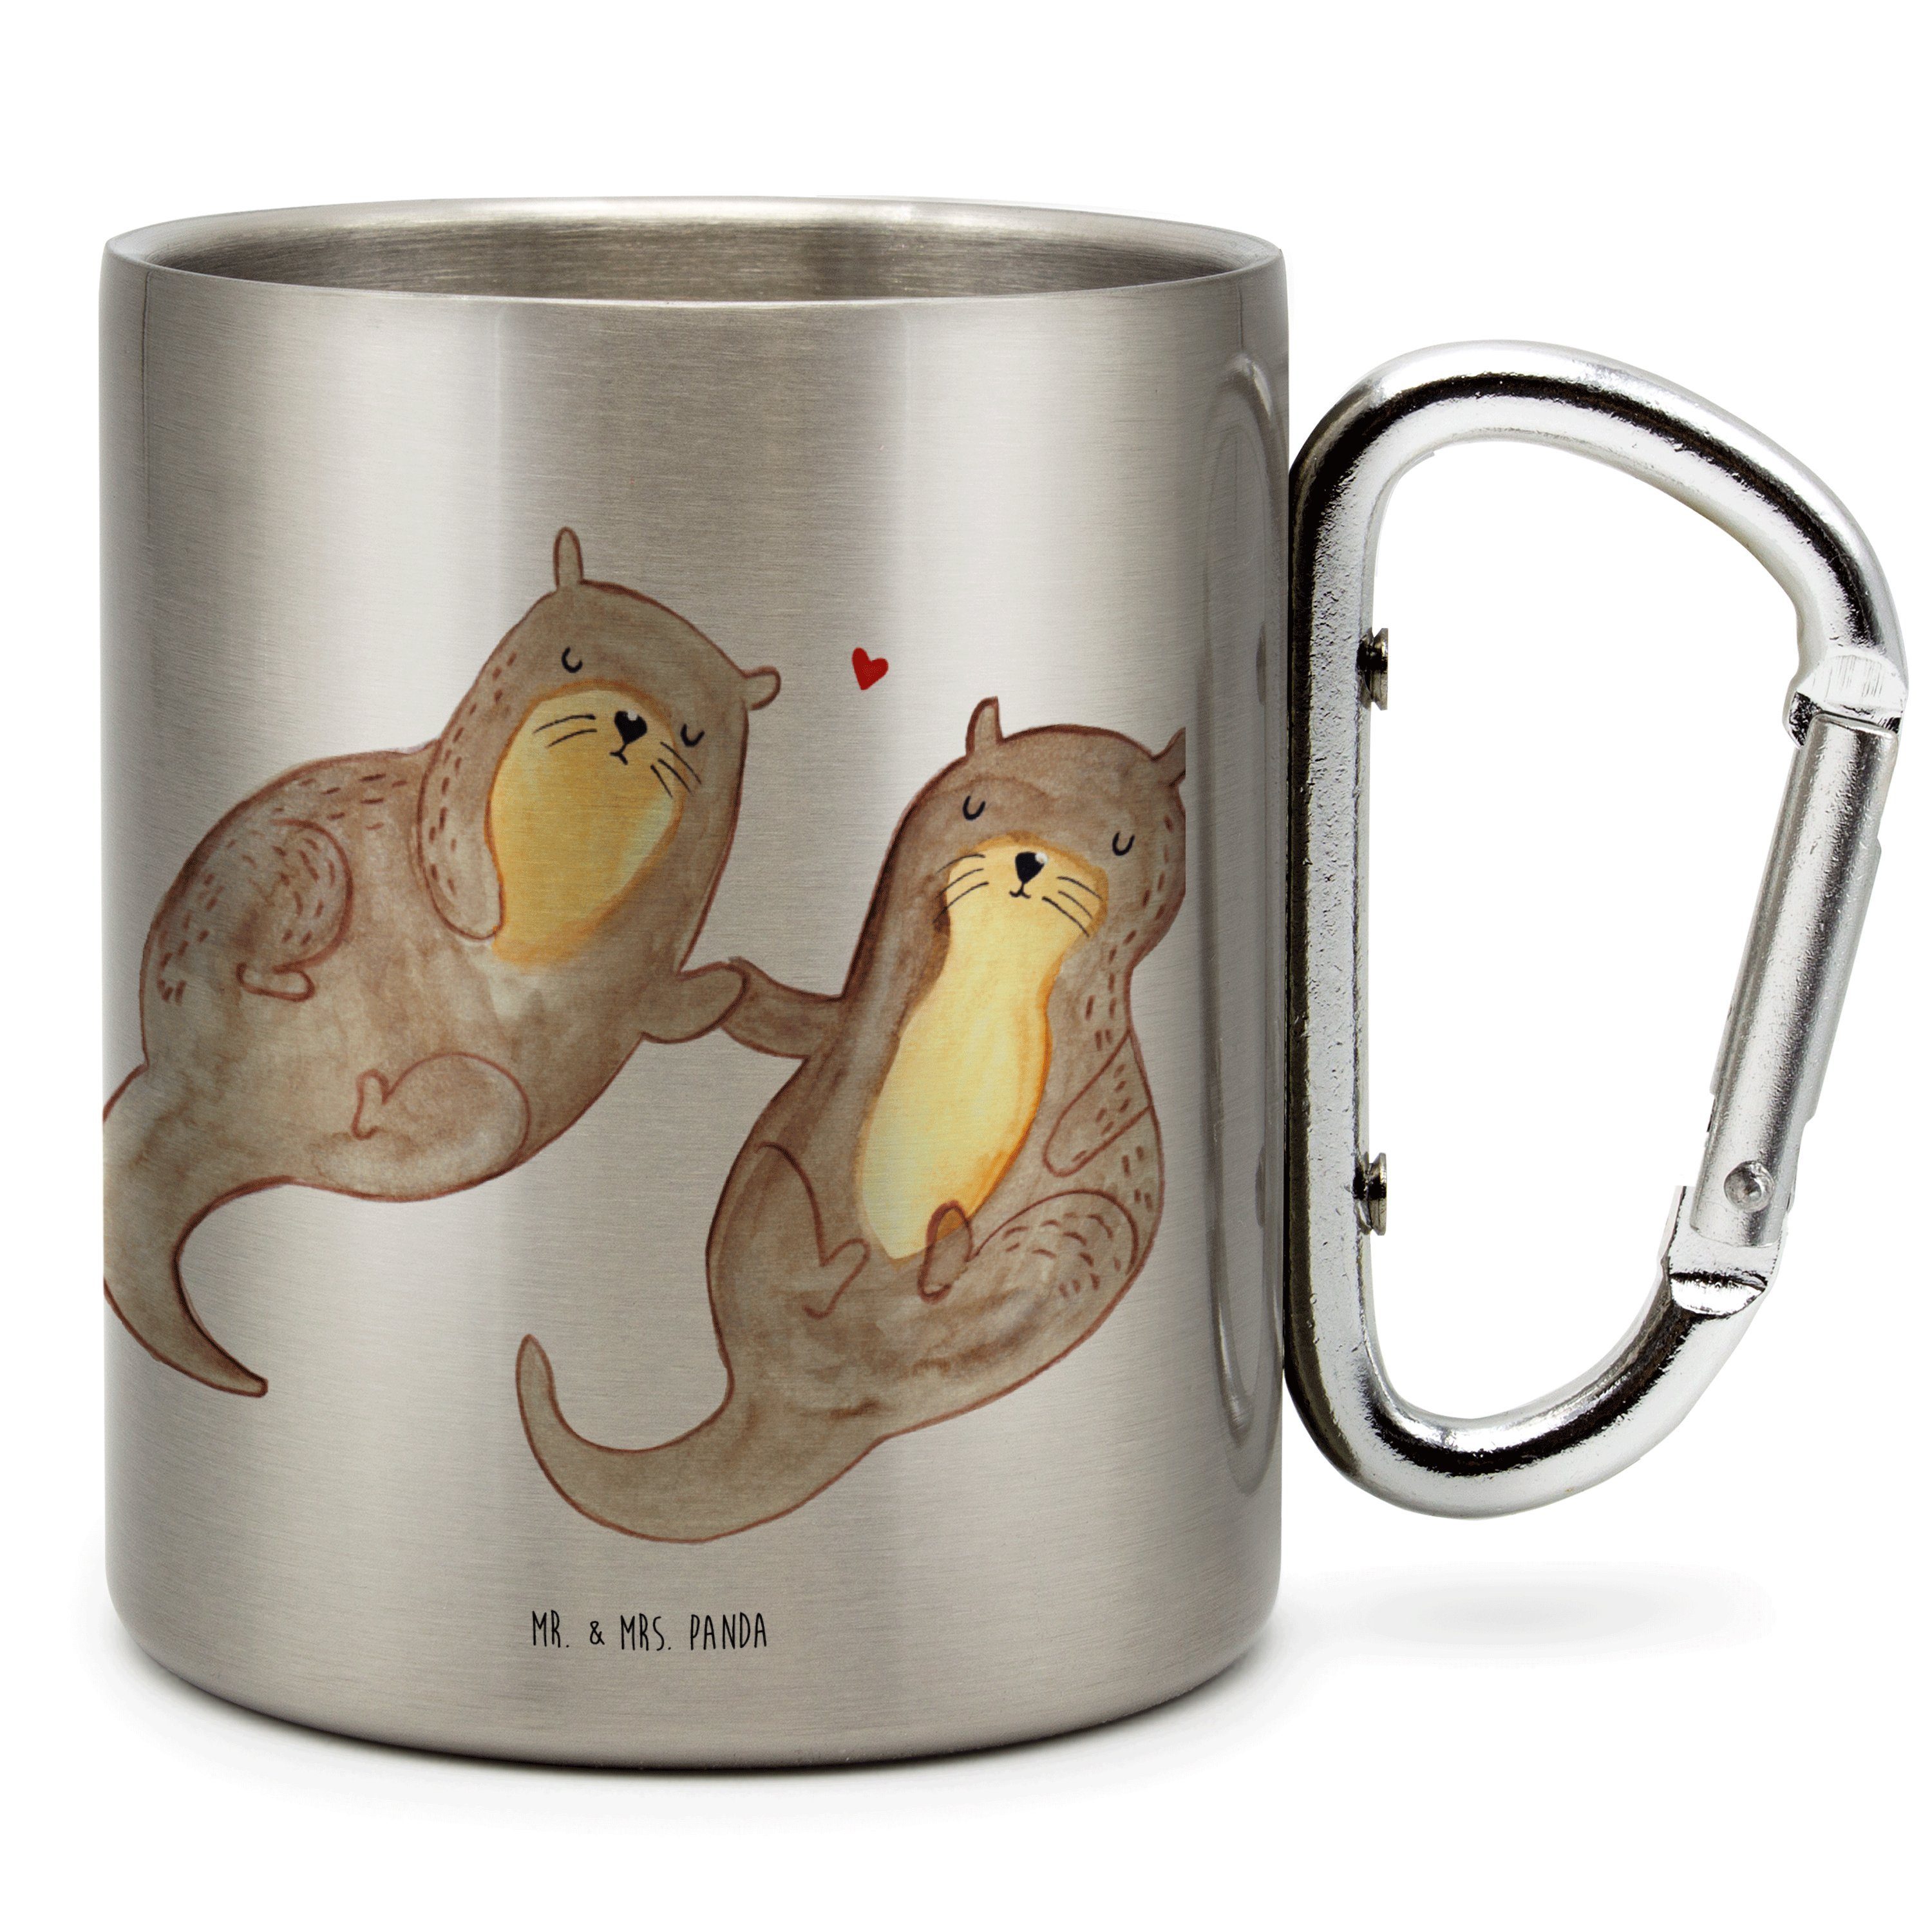 Mr. & Mrs. Panda Tasse Otter händchenhaltend - Transparent - Geschenk, verliebt, Liebe, Seeo, Edelstahl